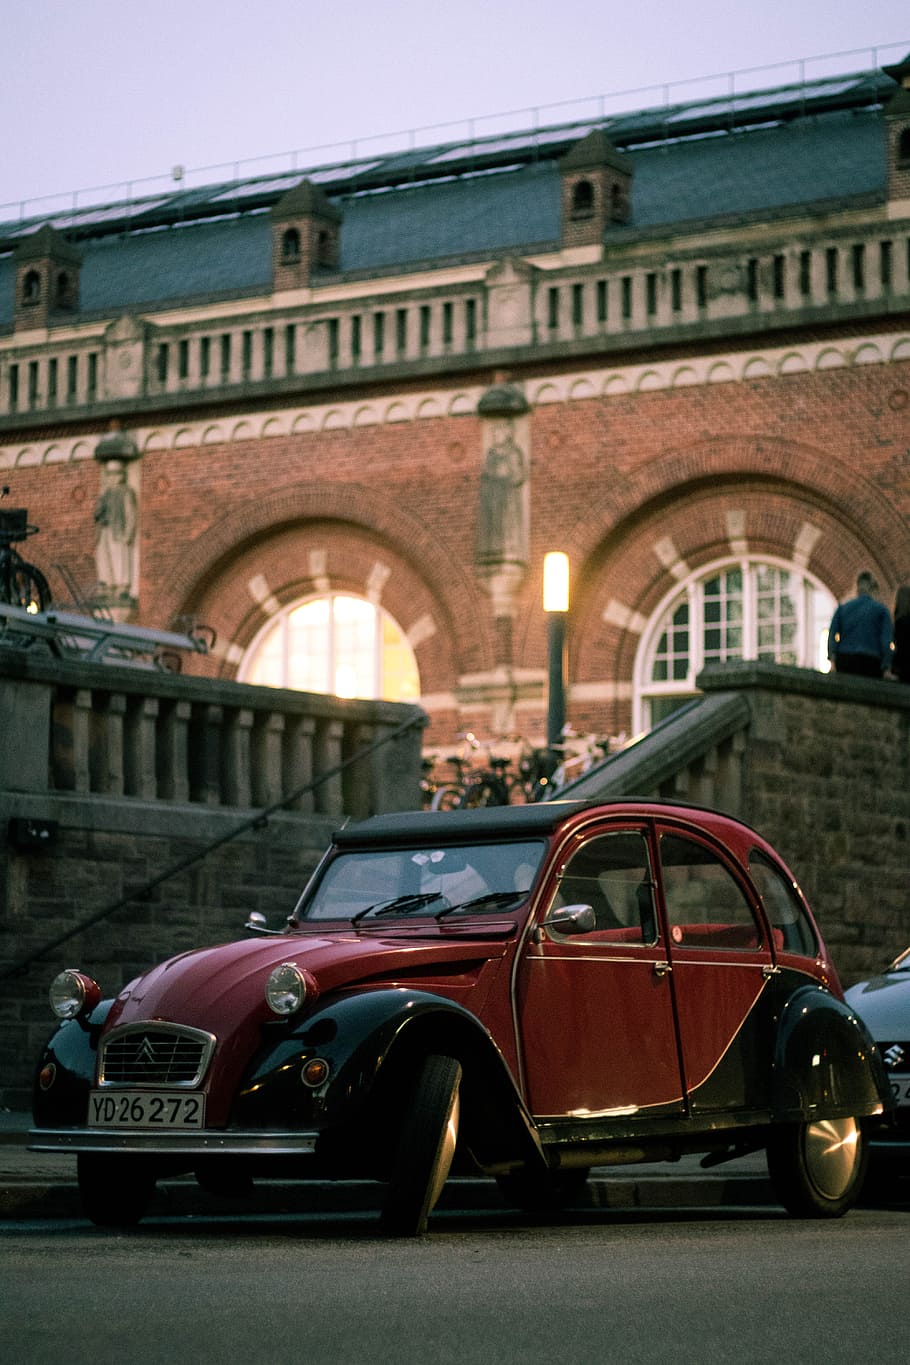 red and black Volkswagen Beetle parked beside brown building